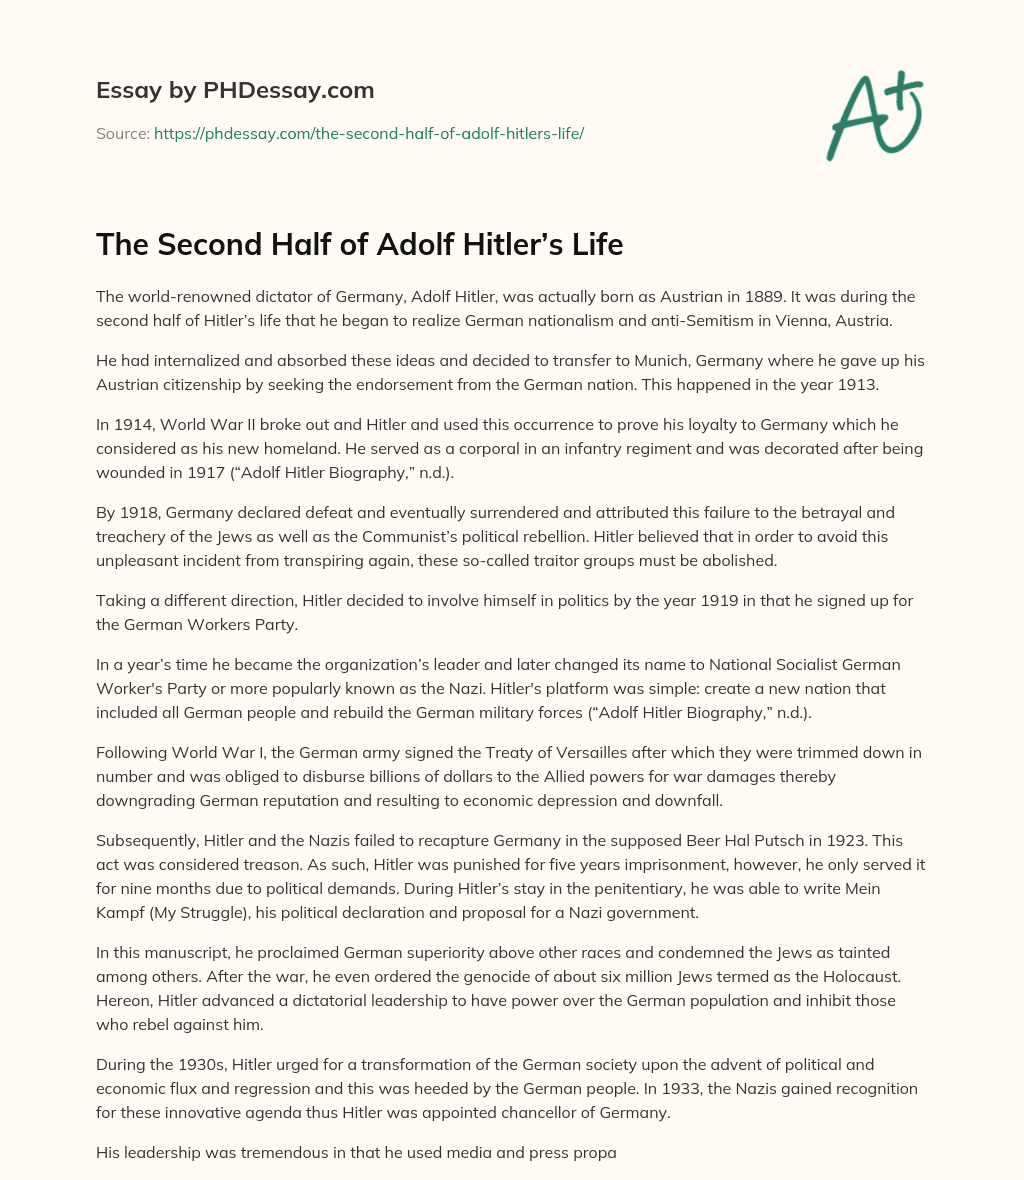 The Second Half of Adolf Hitler’s Life essay